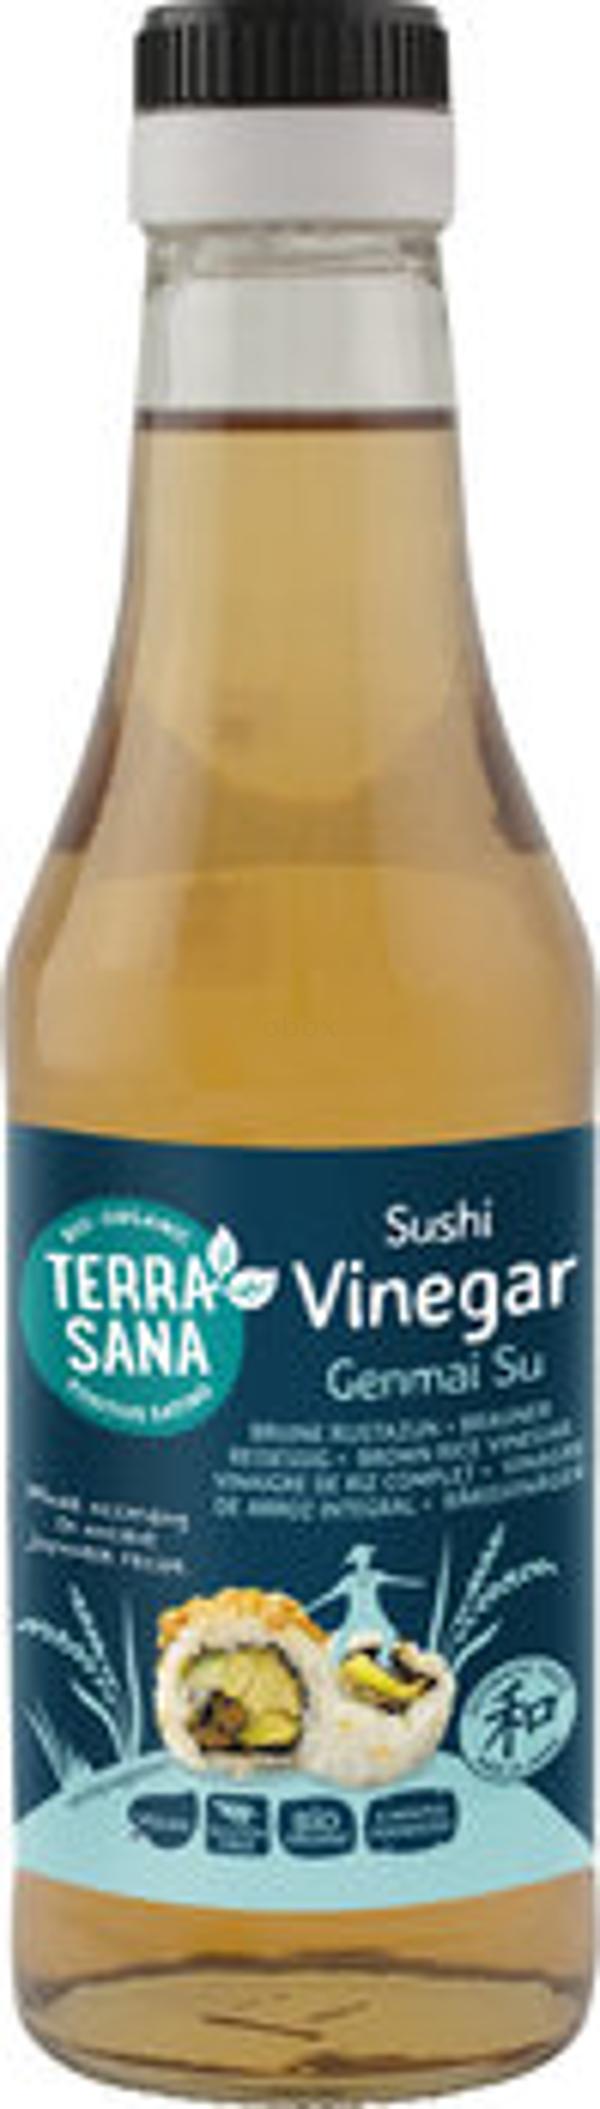 Produktfoto zu Genmai Su - Sushi-Essig